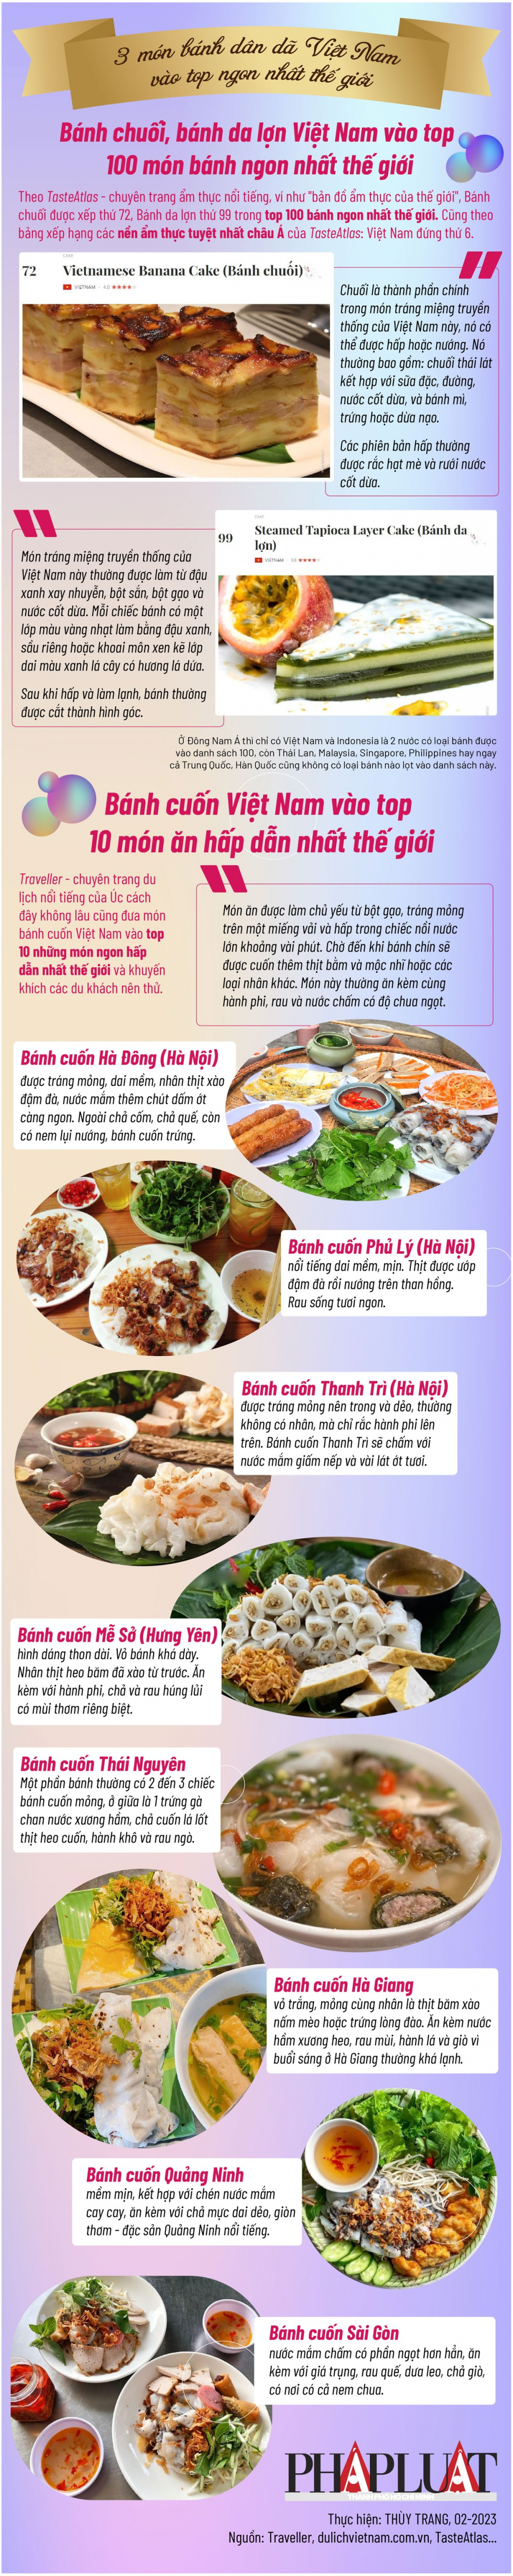 infographic-3-mon-banh-dan-da-viet-nam-am-thuc-vao-top-ngon-nhat-the-gioi-02-2023-banhchuoi-banh-da-lon-banh-cuon-info-info-5261